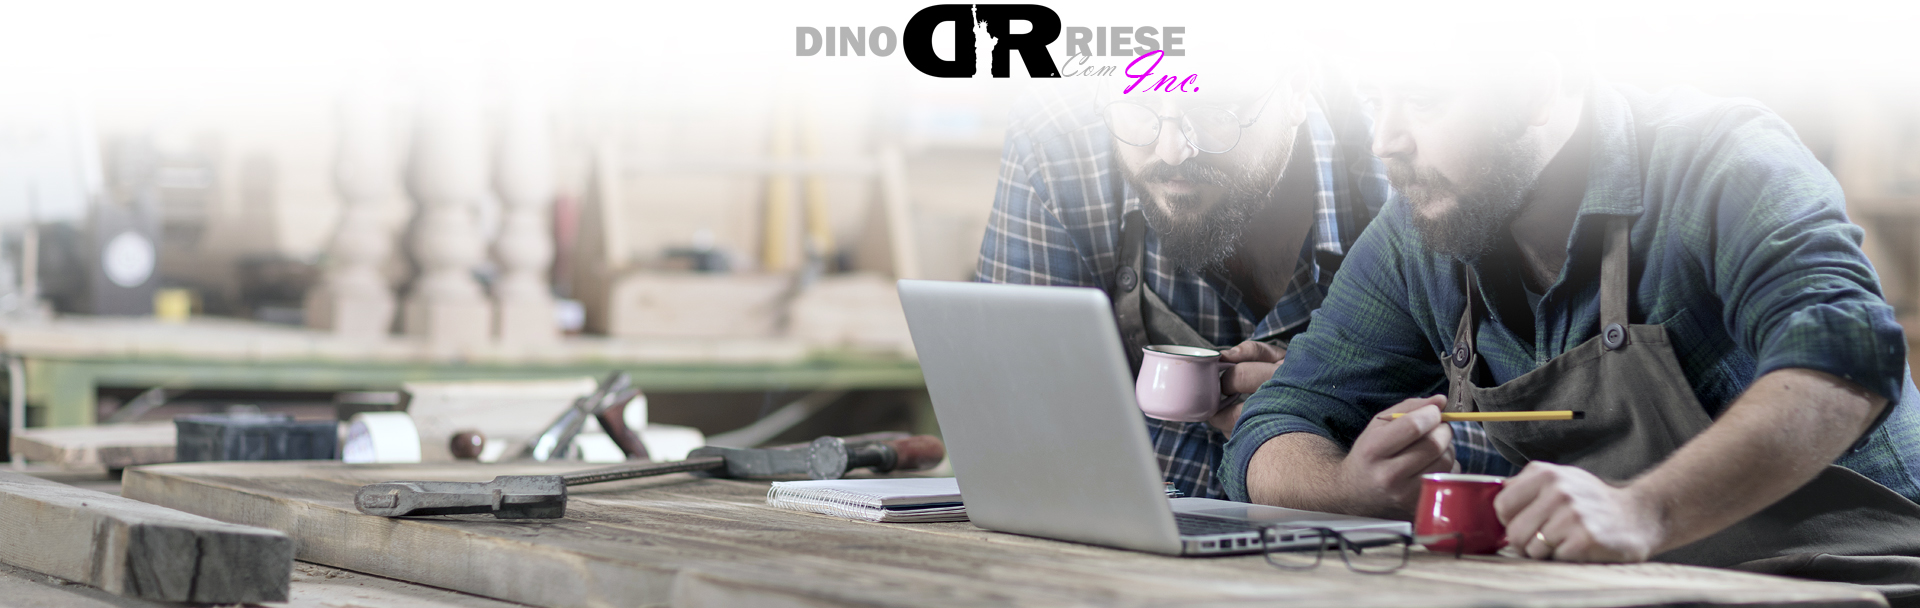 Small Business Websites | DinoRiese.com Inc. - Image